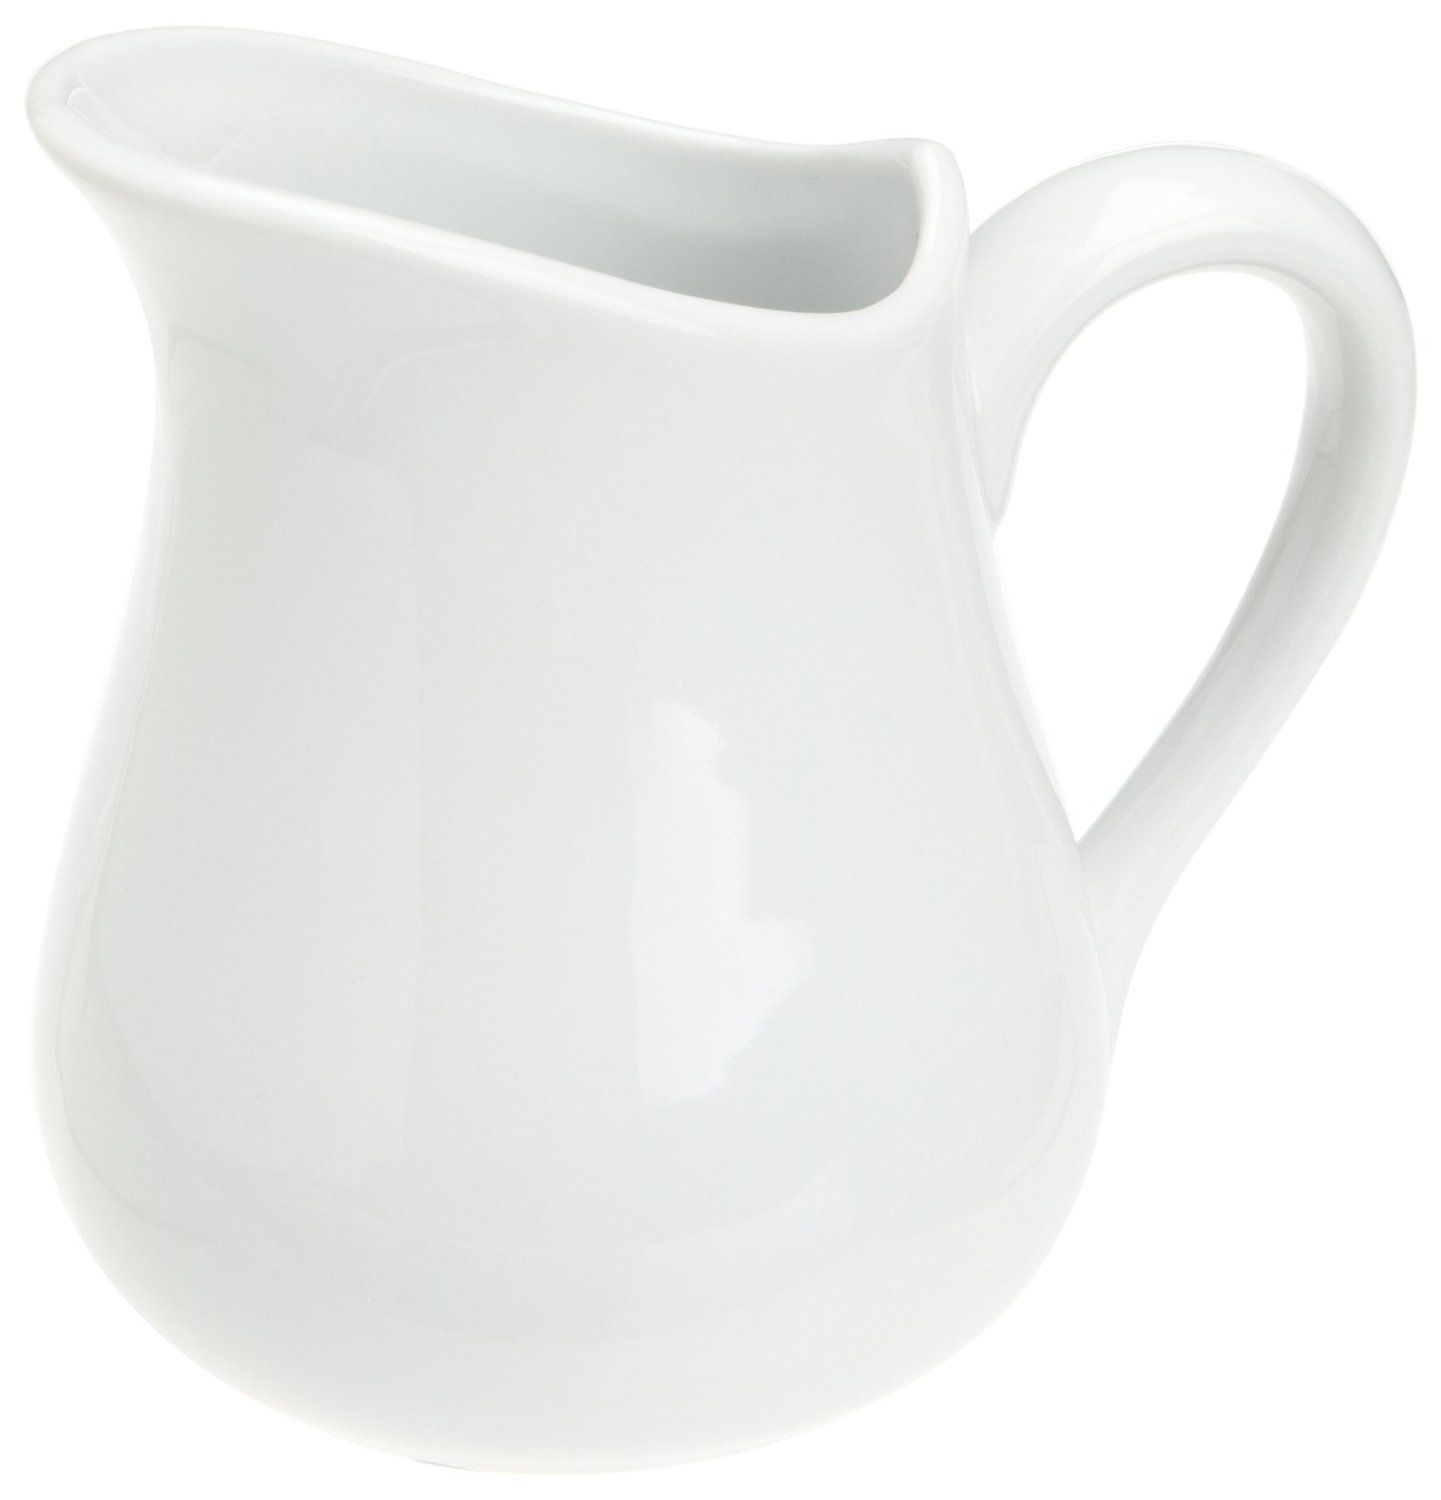 Harold Imports Porcelain 16oz. Pitcher - Walmart.com | Walmart (US)